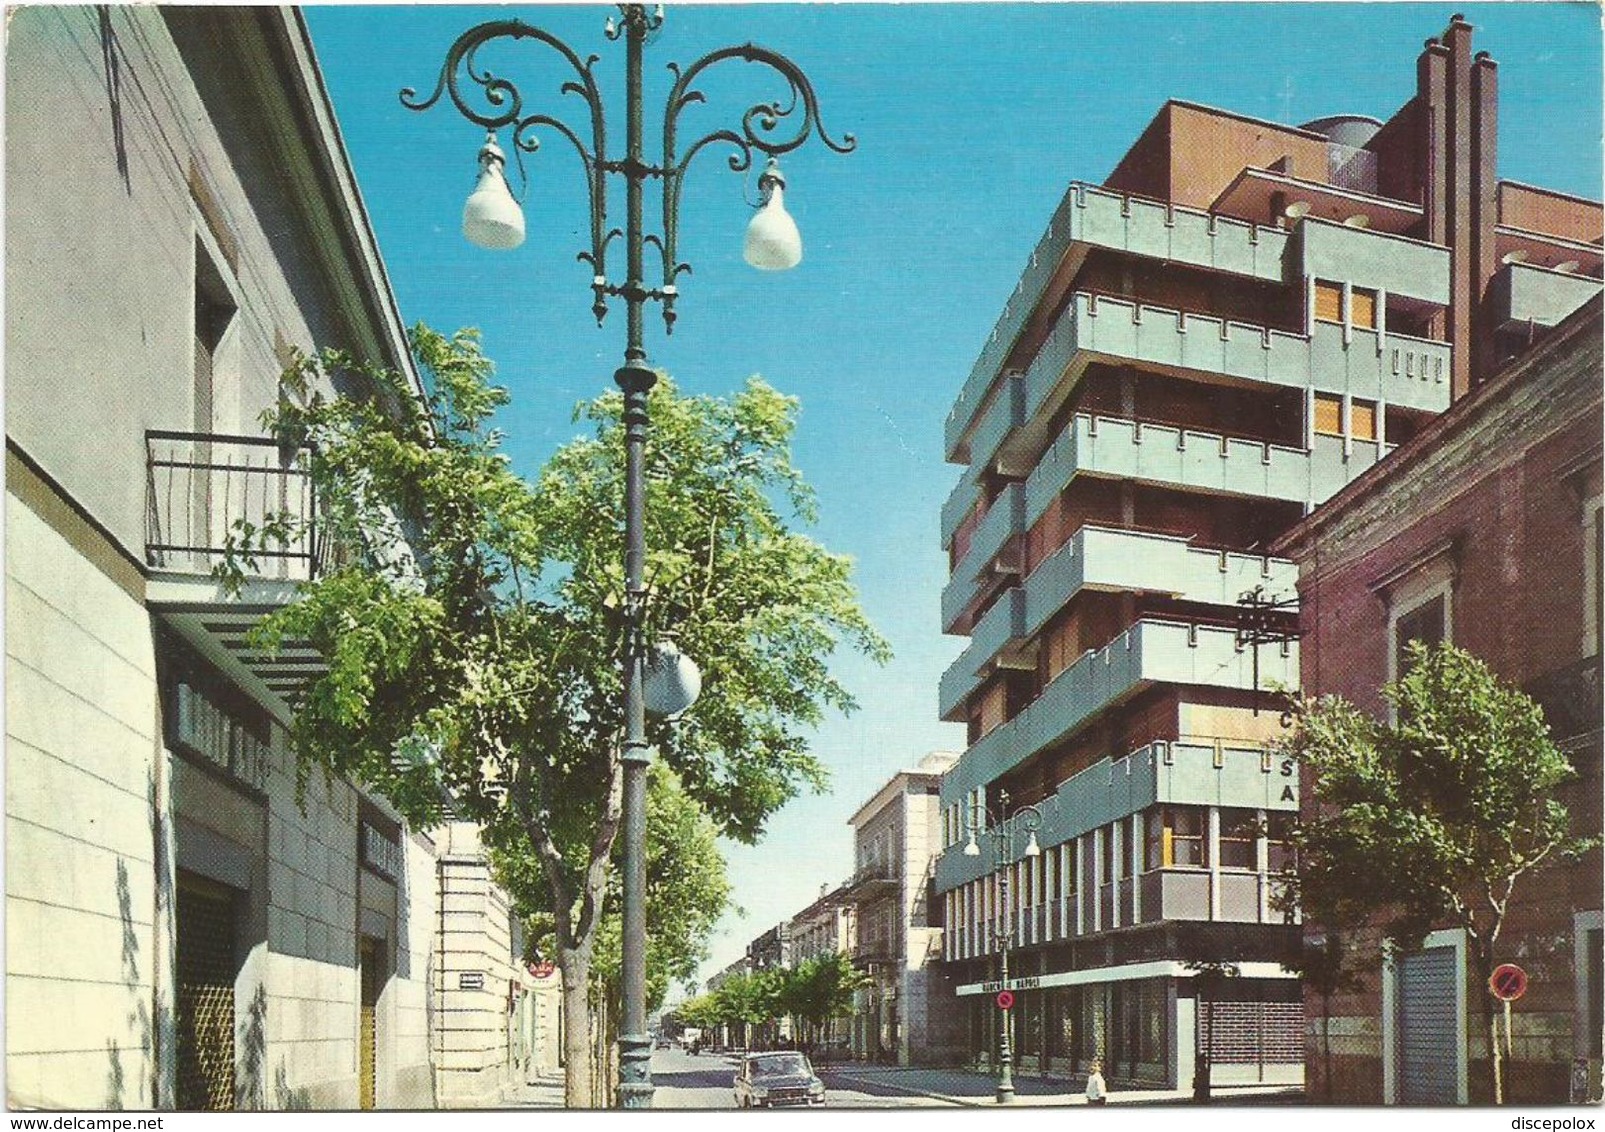 X1279 Cerignola (Foggia) - Via Roma - Palazzo Tozzi - Auto Cars Voitures / Viaggiata 1974 - Cerignola